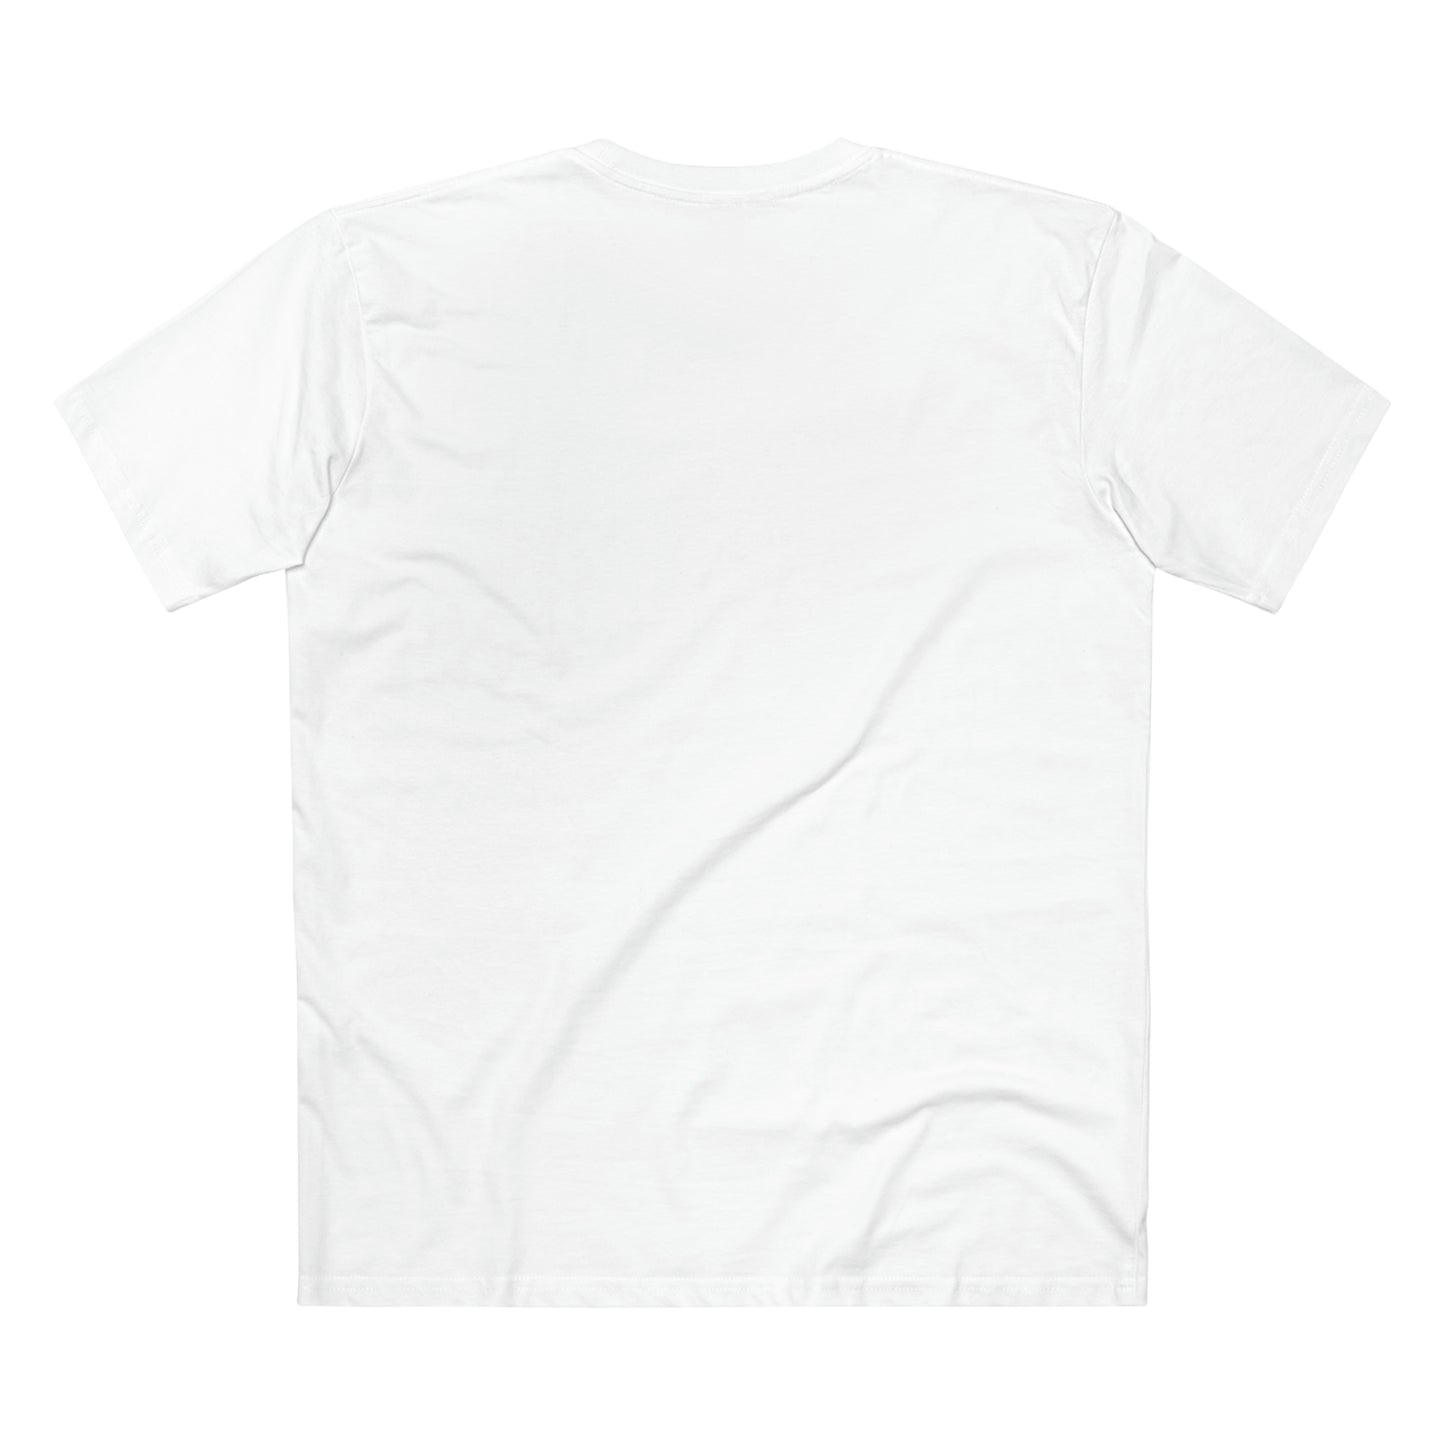 Urban FO Pickleball Series T-Shirt